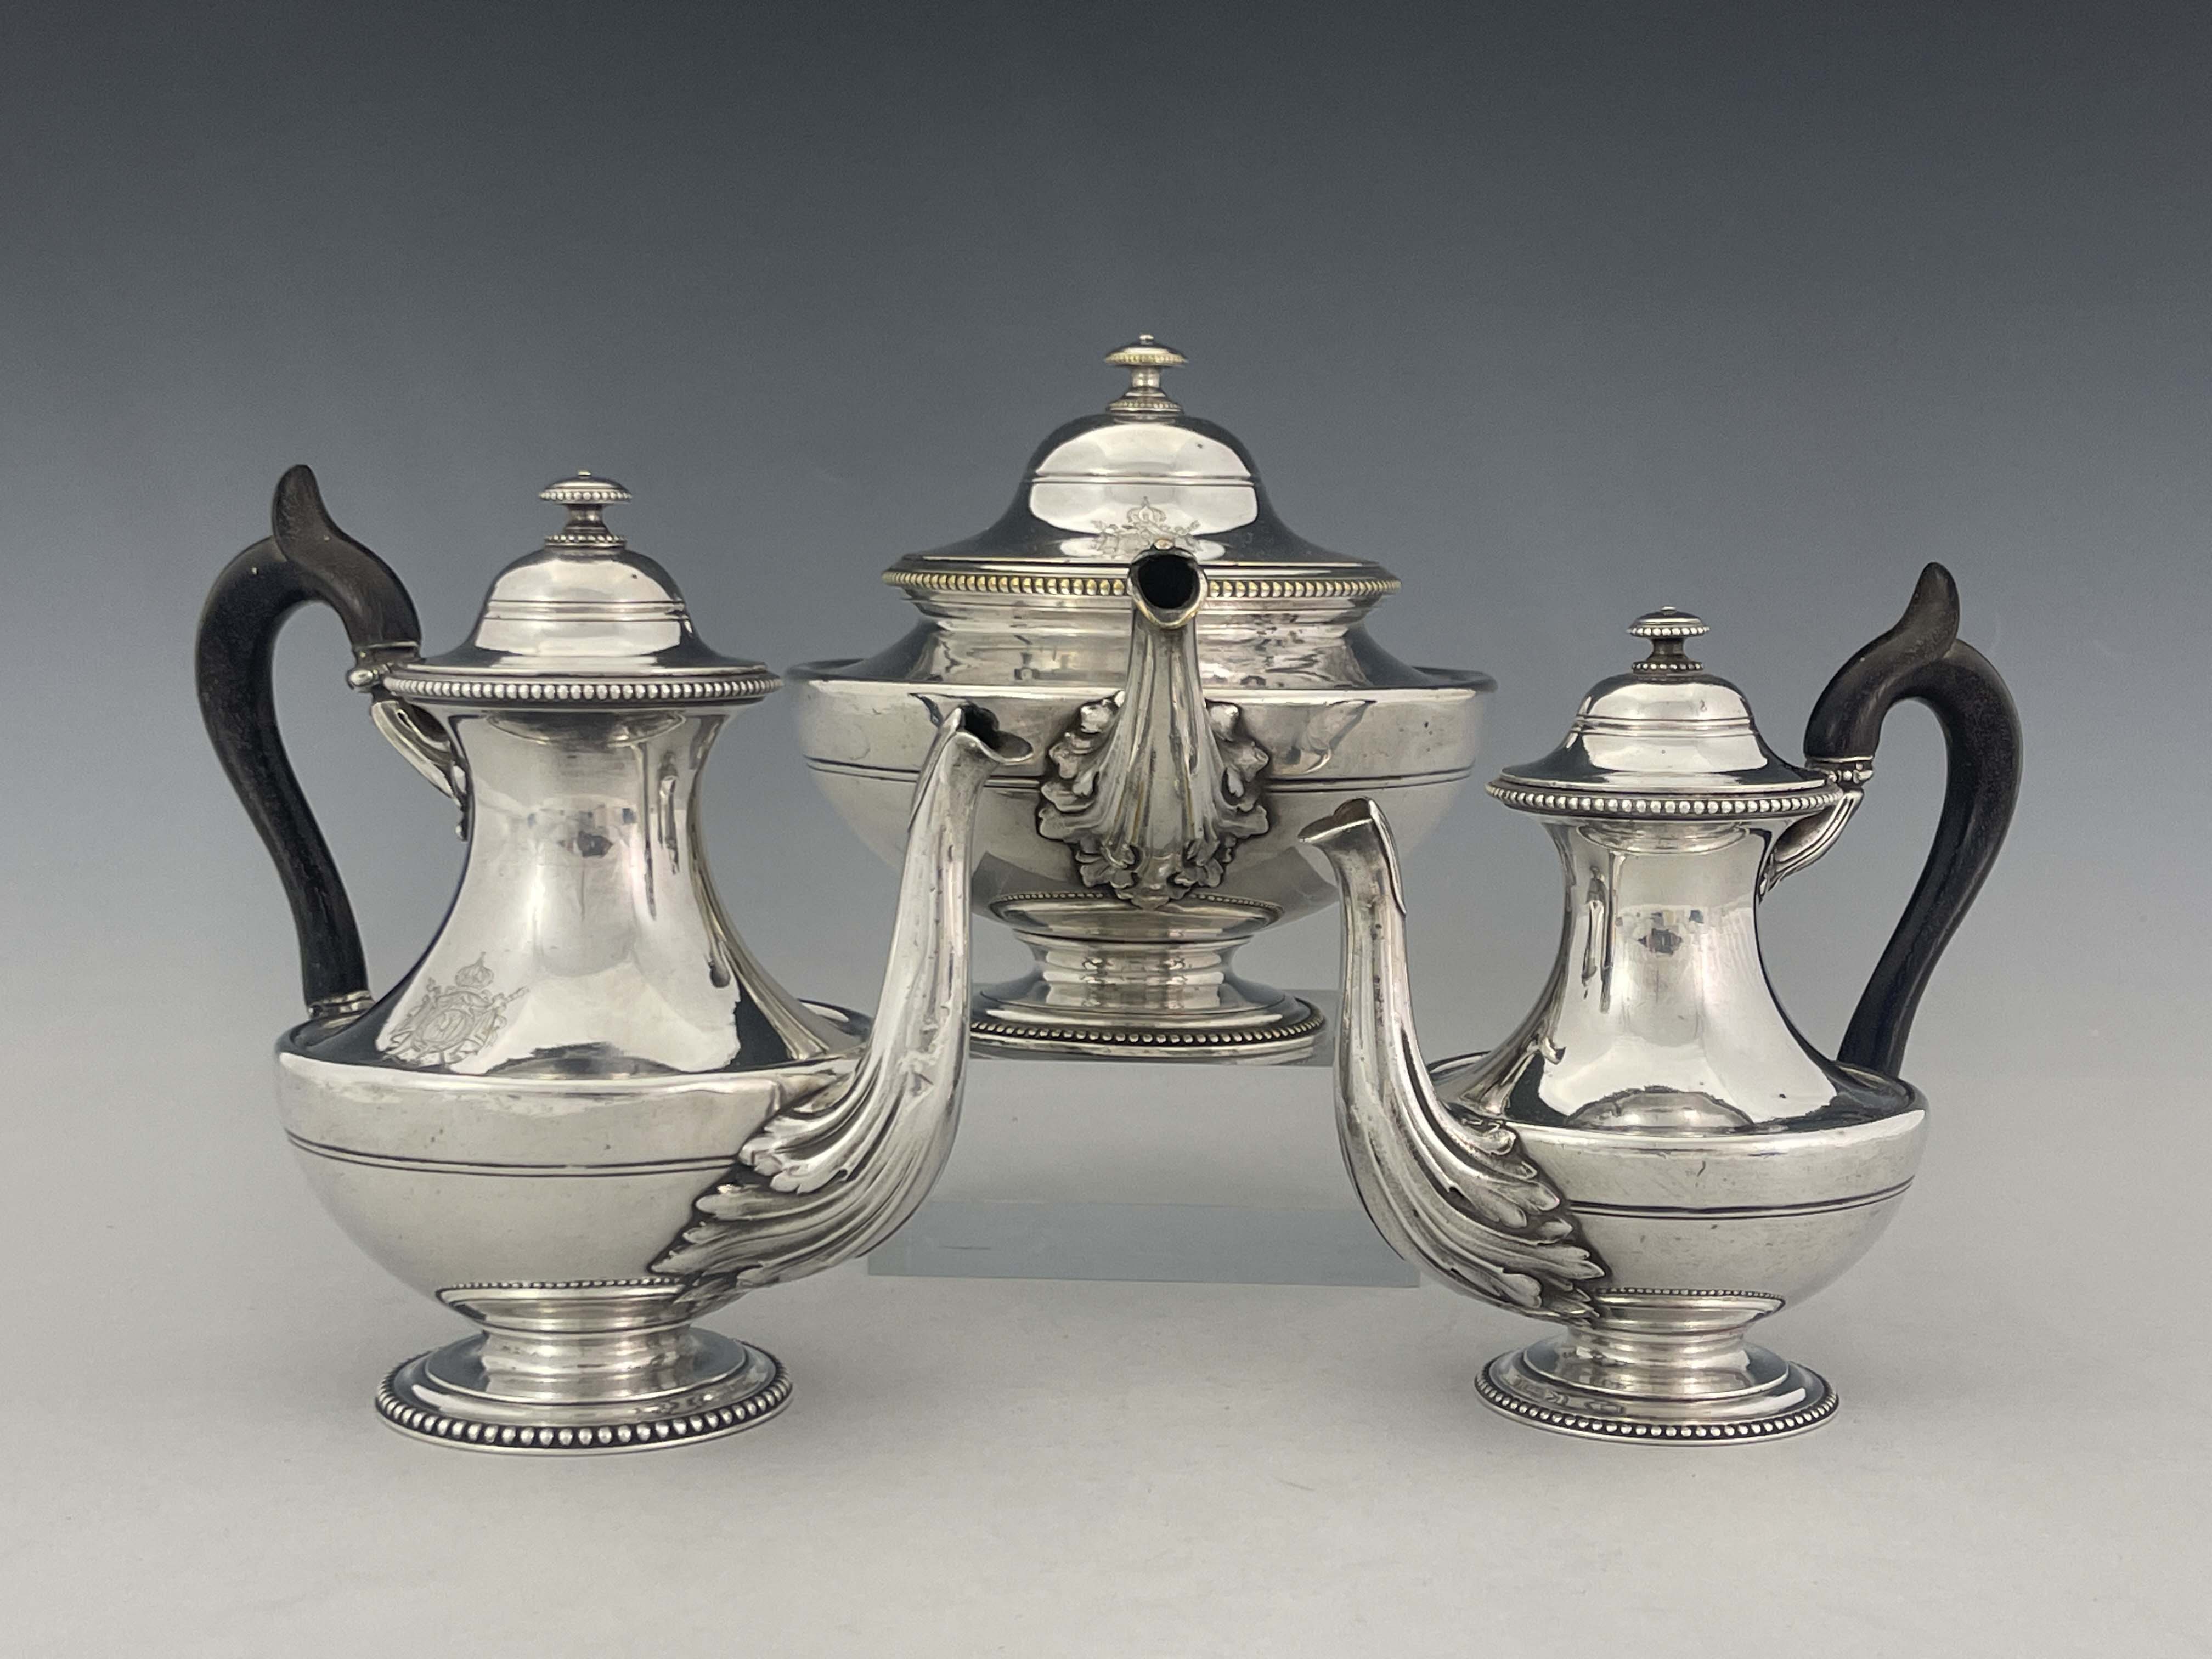 Service de la Maison de l'Empereur, a Napoleon III silver plated three piece tea and coffee service - Image 2 of 6